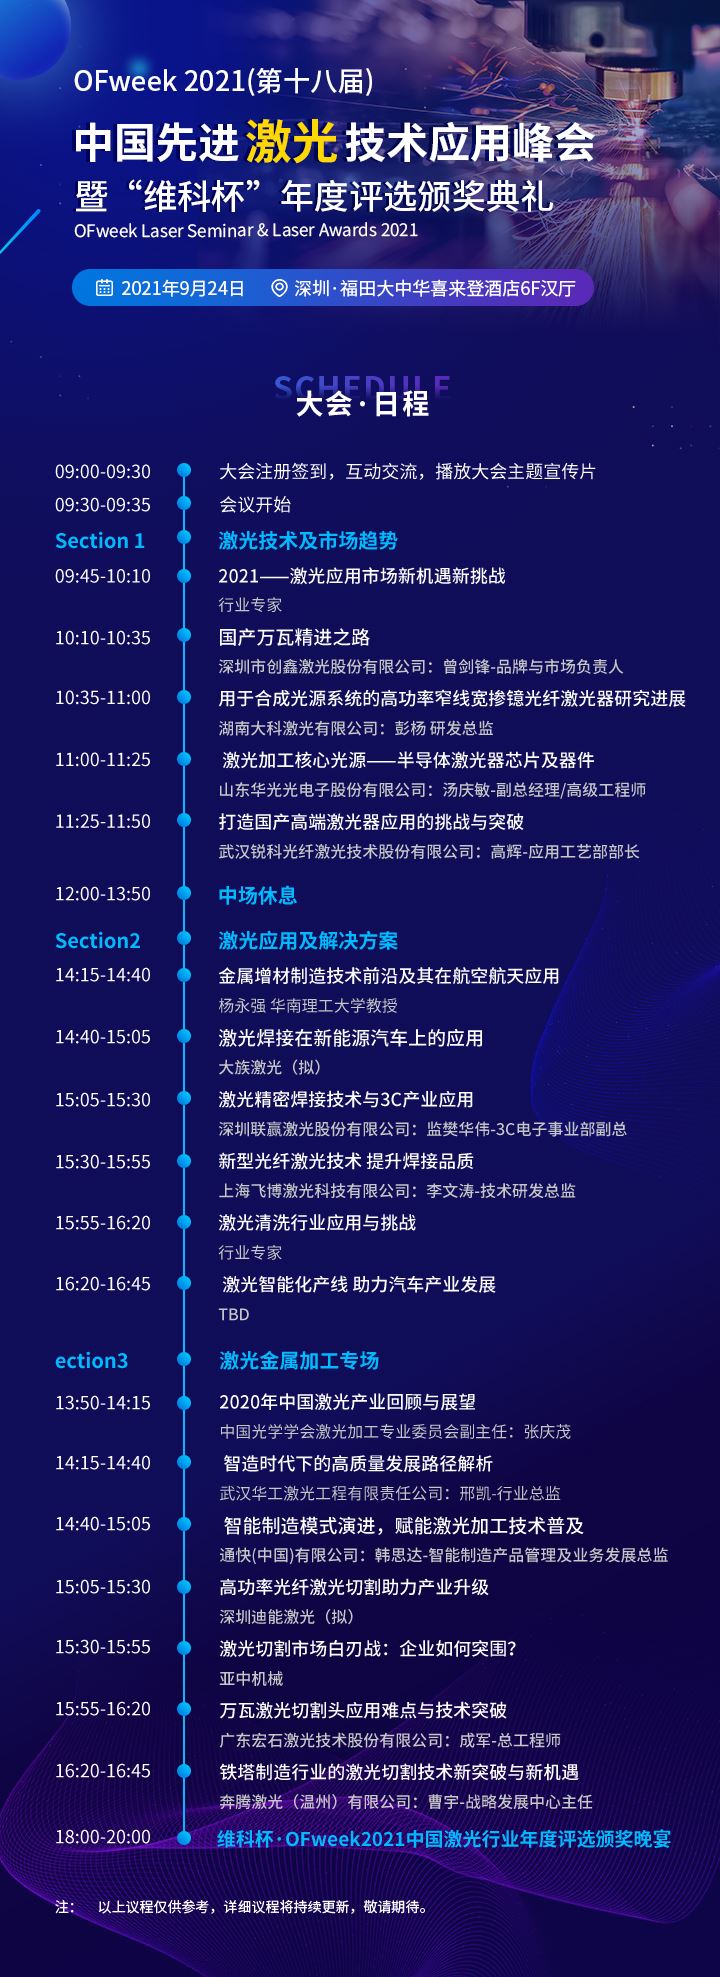 OFweek2021（第十八届）中国先进激光技术应用峰会暨“维科杯”年度评选颁奖典礼-议程H5.jpg